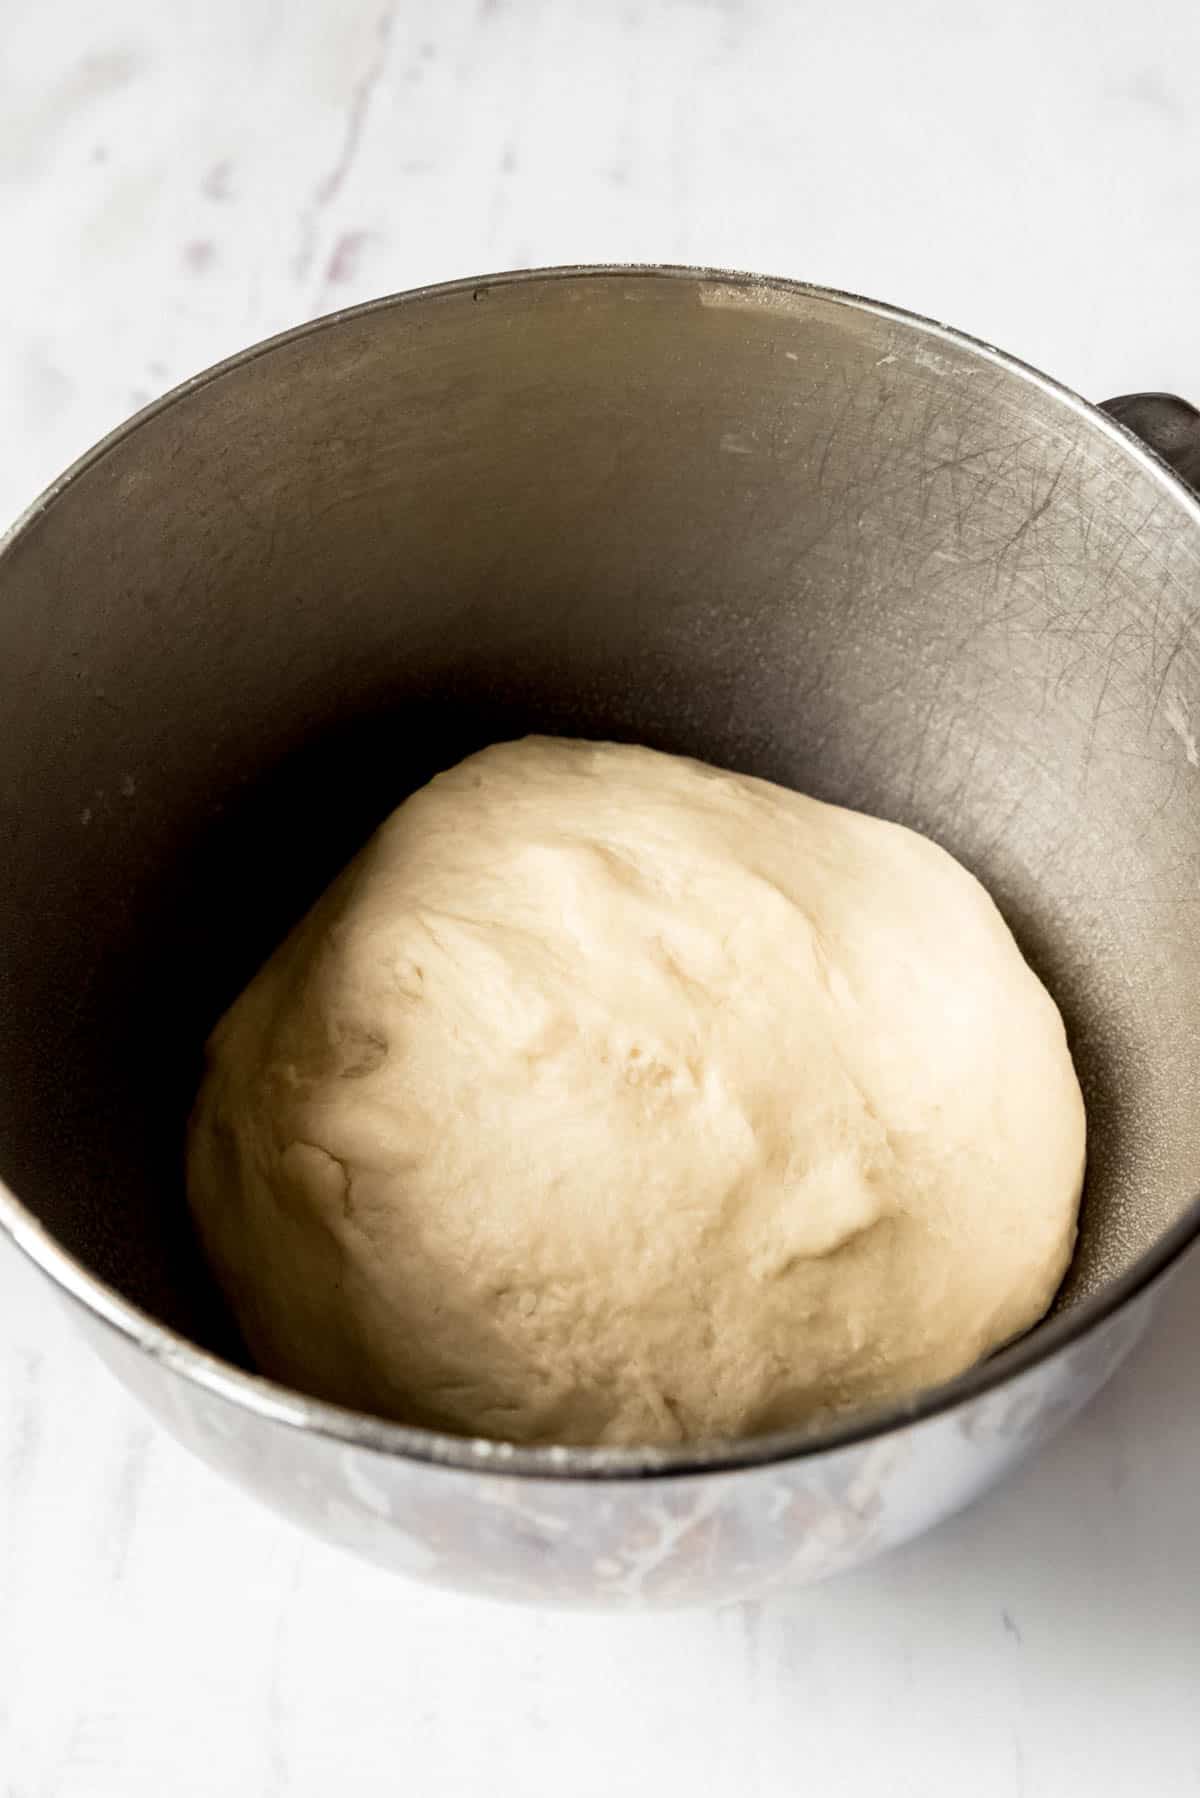 Soft Homemade Potato Bread - House of Nash Eats